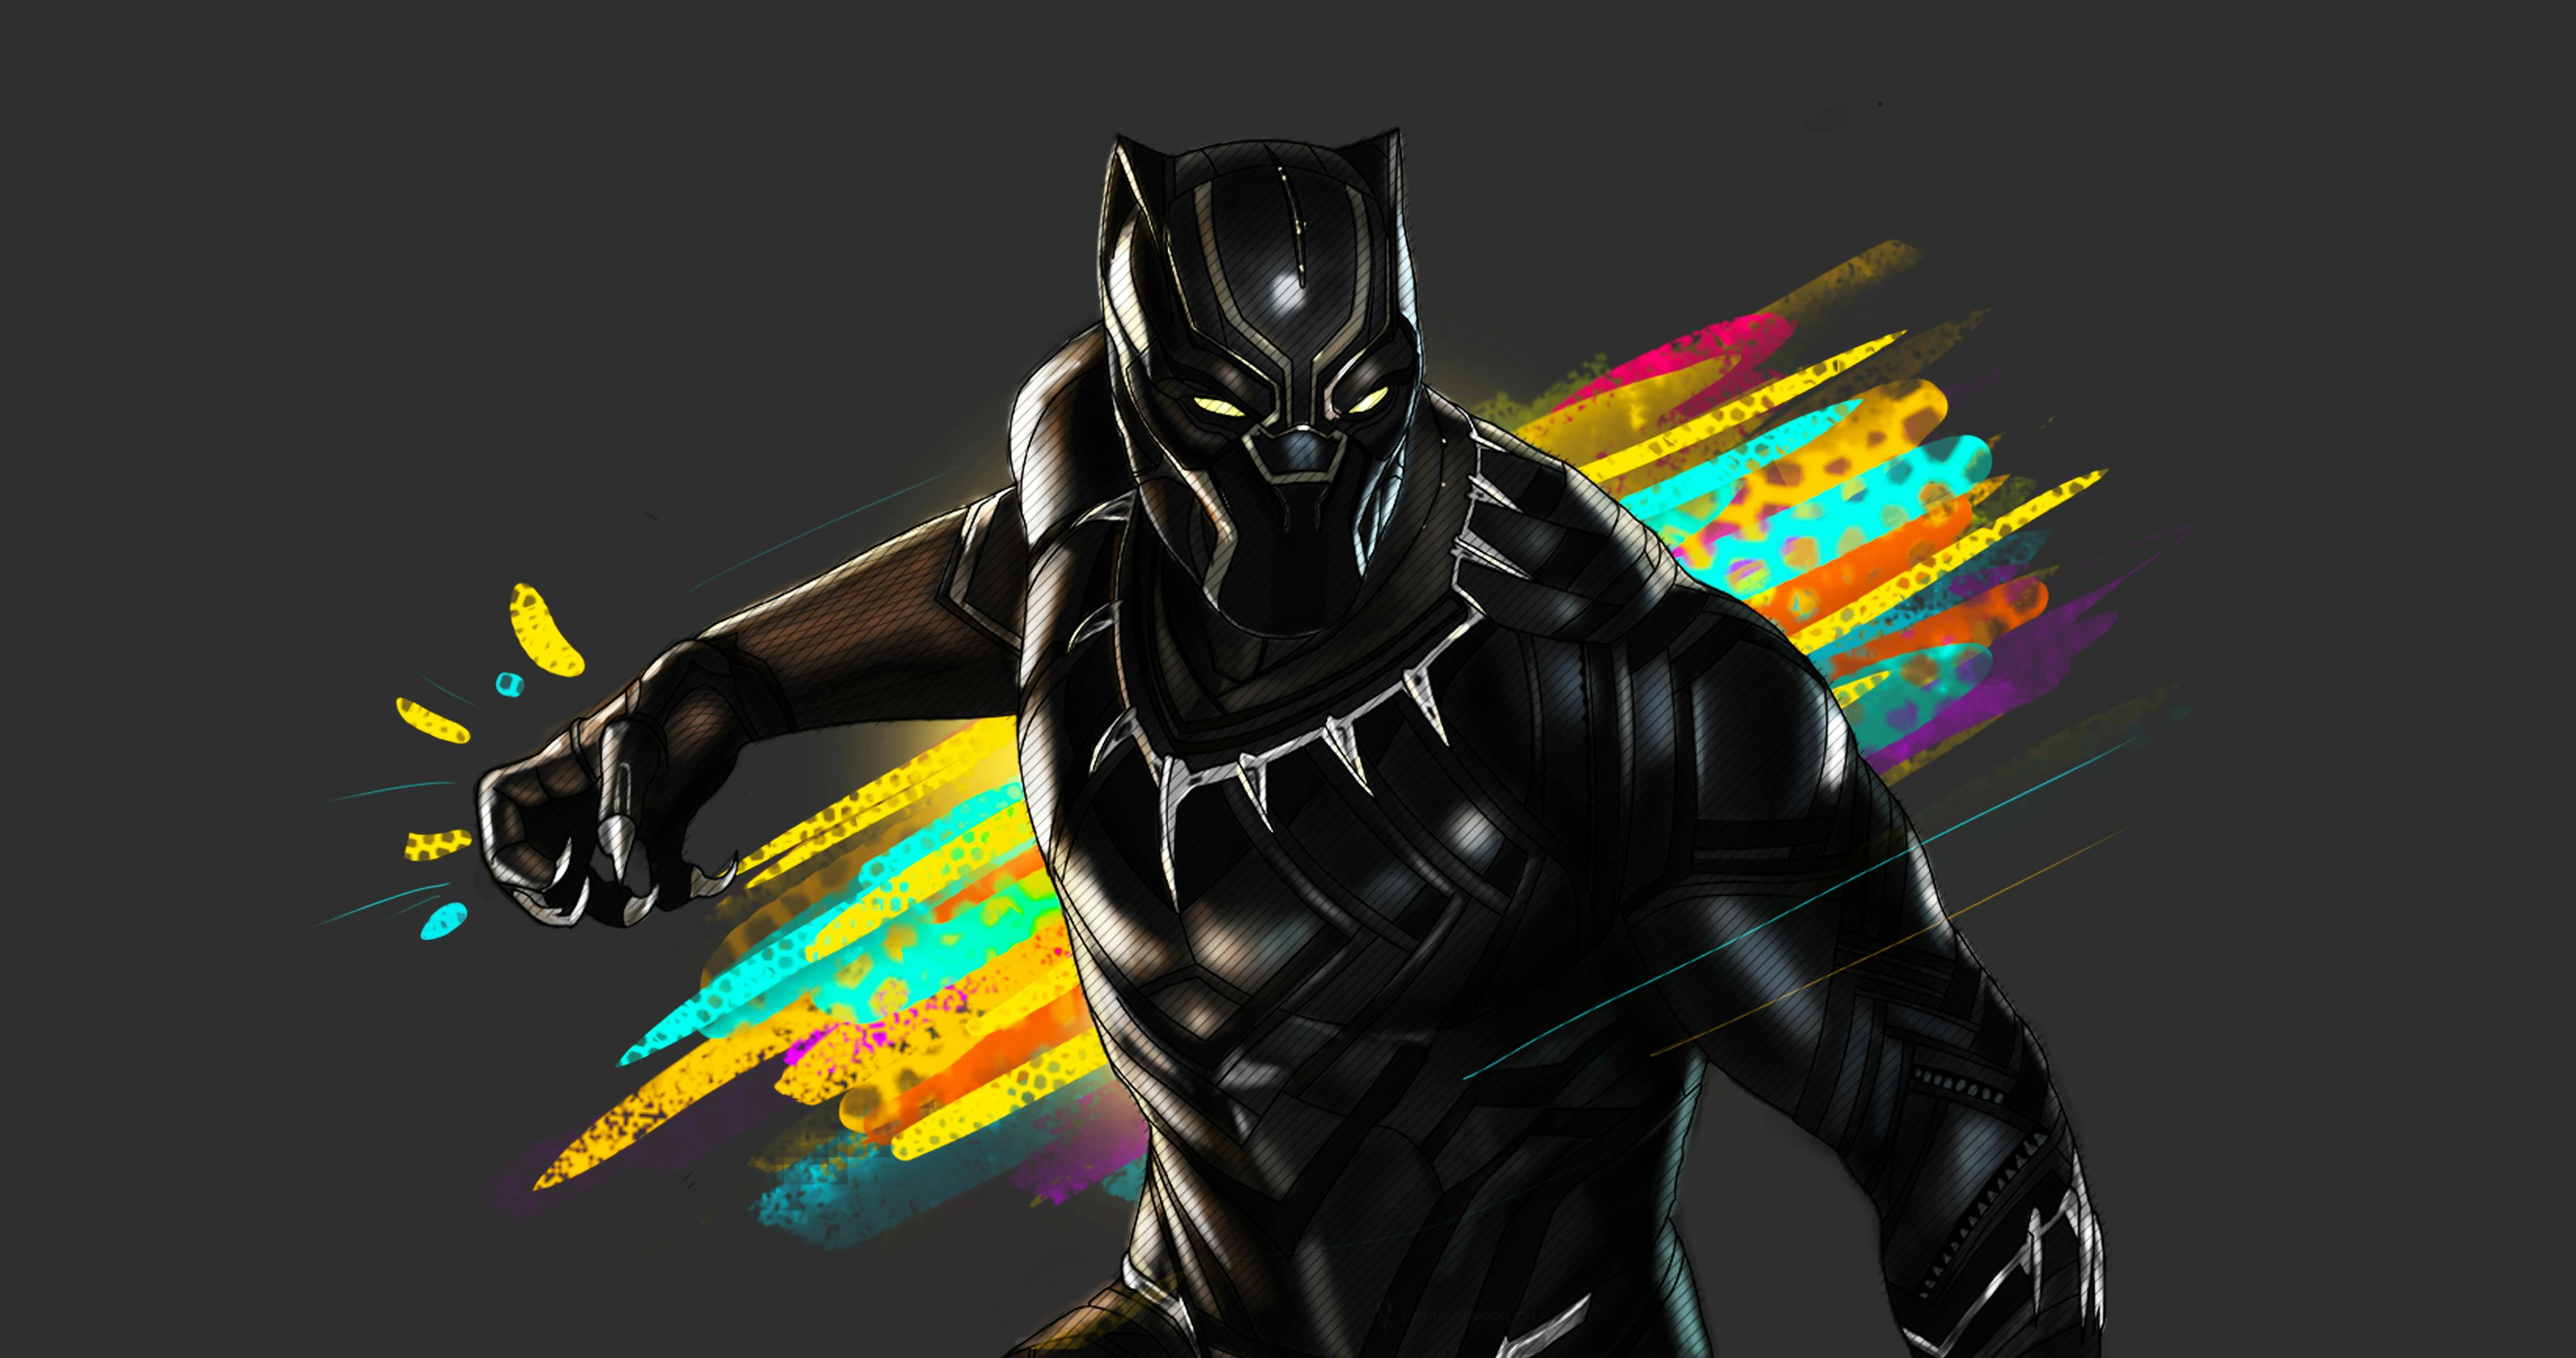 4k Wallpaper For Mobile Black Panther